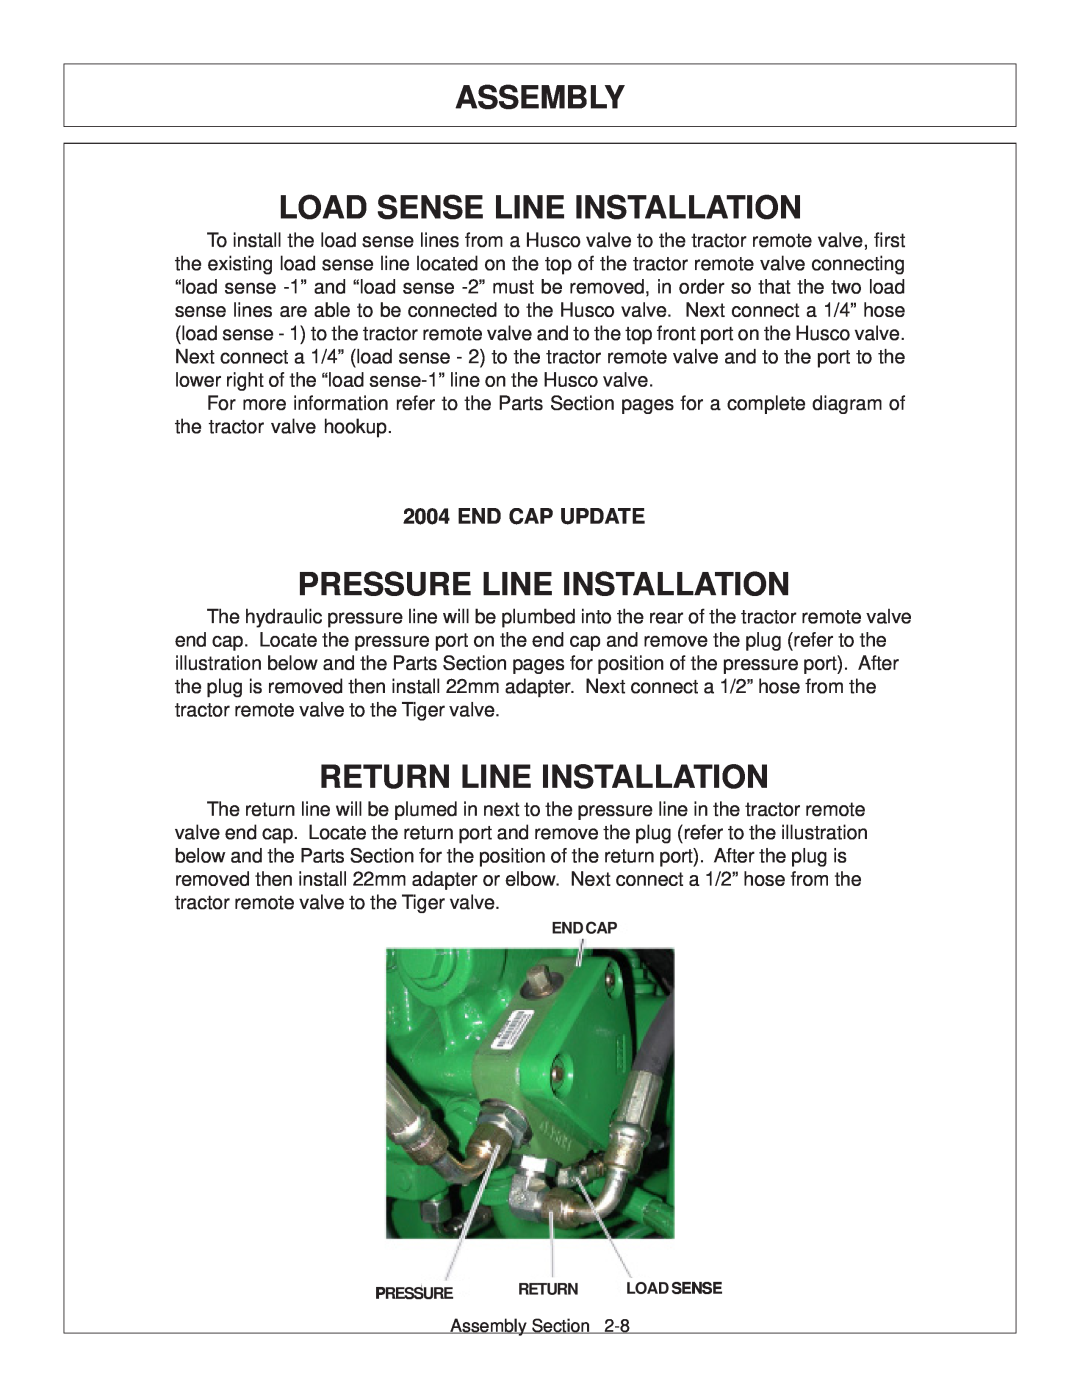 Tiger Products Co., Ltd JD 72-7520 Load Sense Line Installation, Assembly, Pressure Line Installation, End Cap Update 